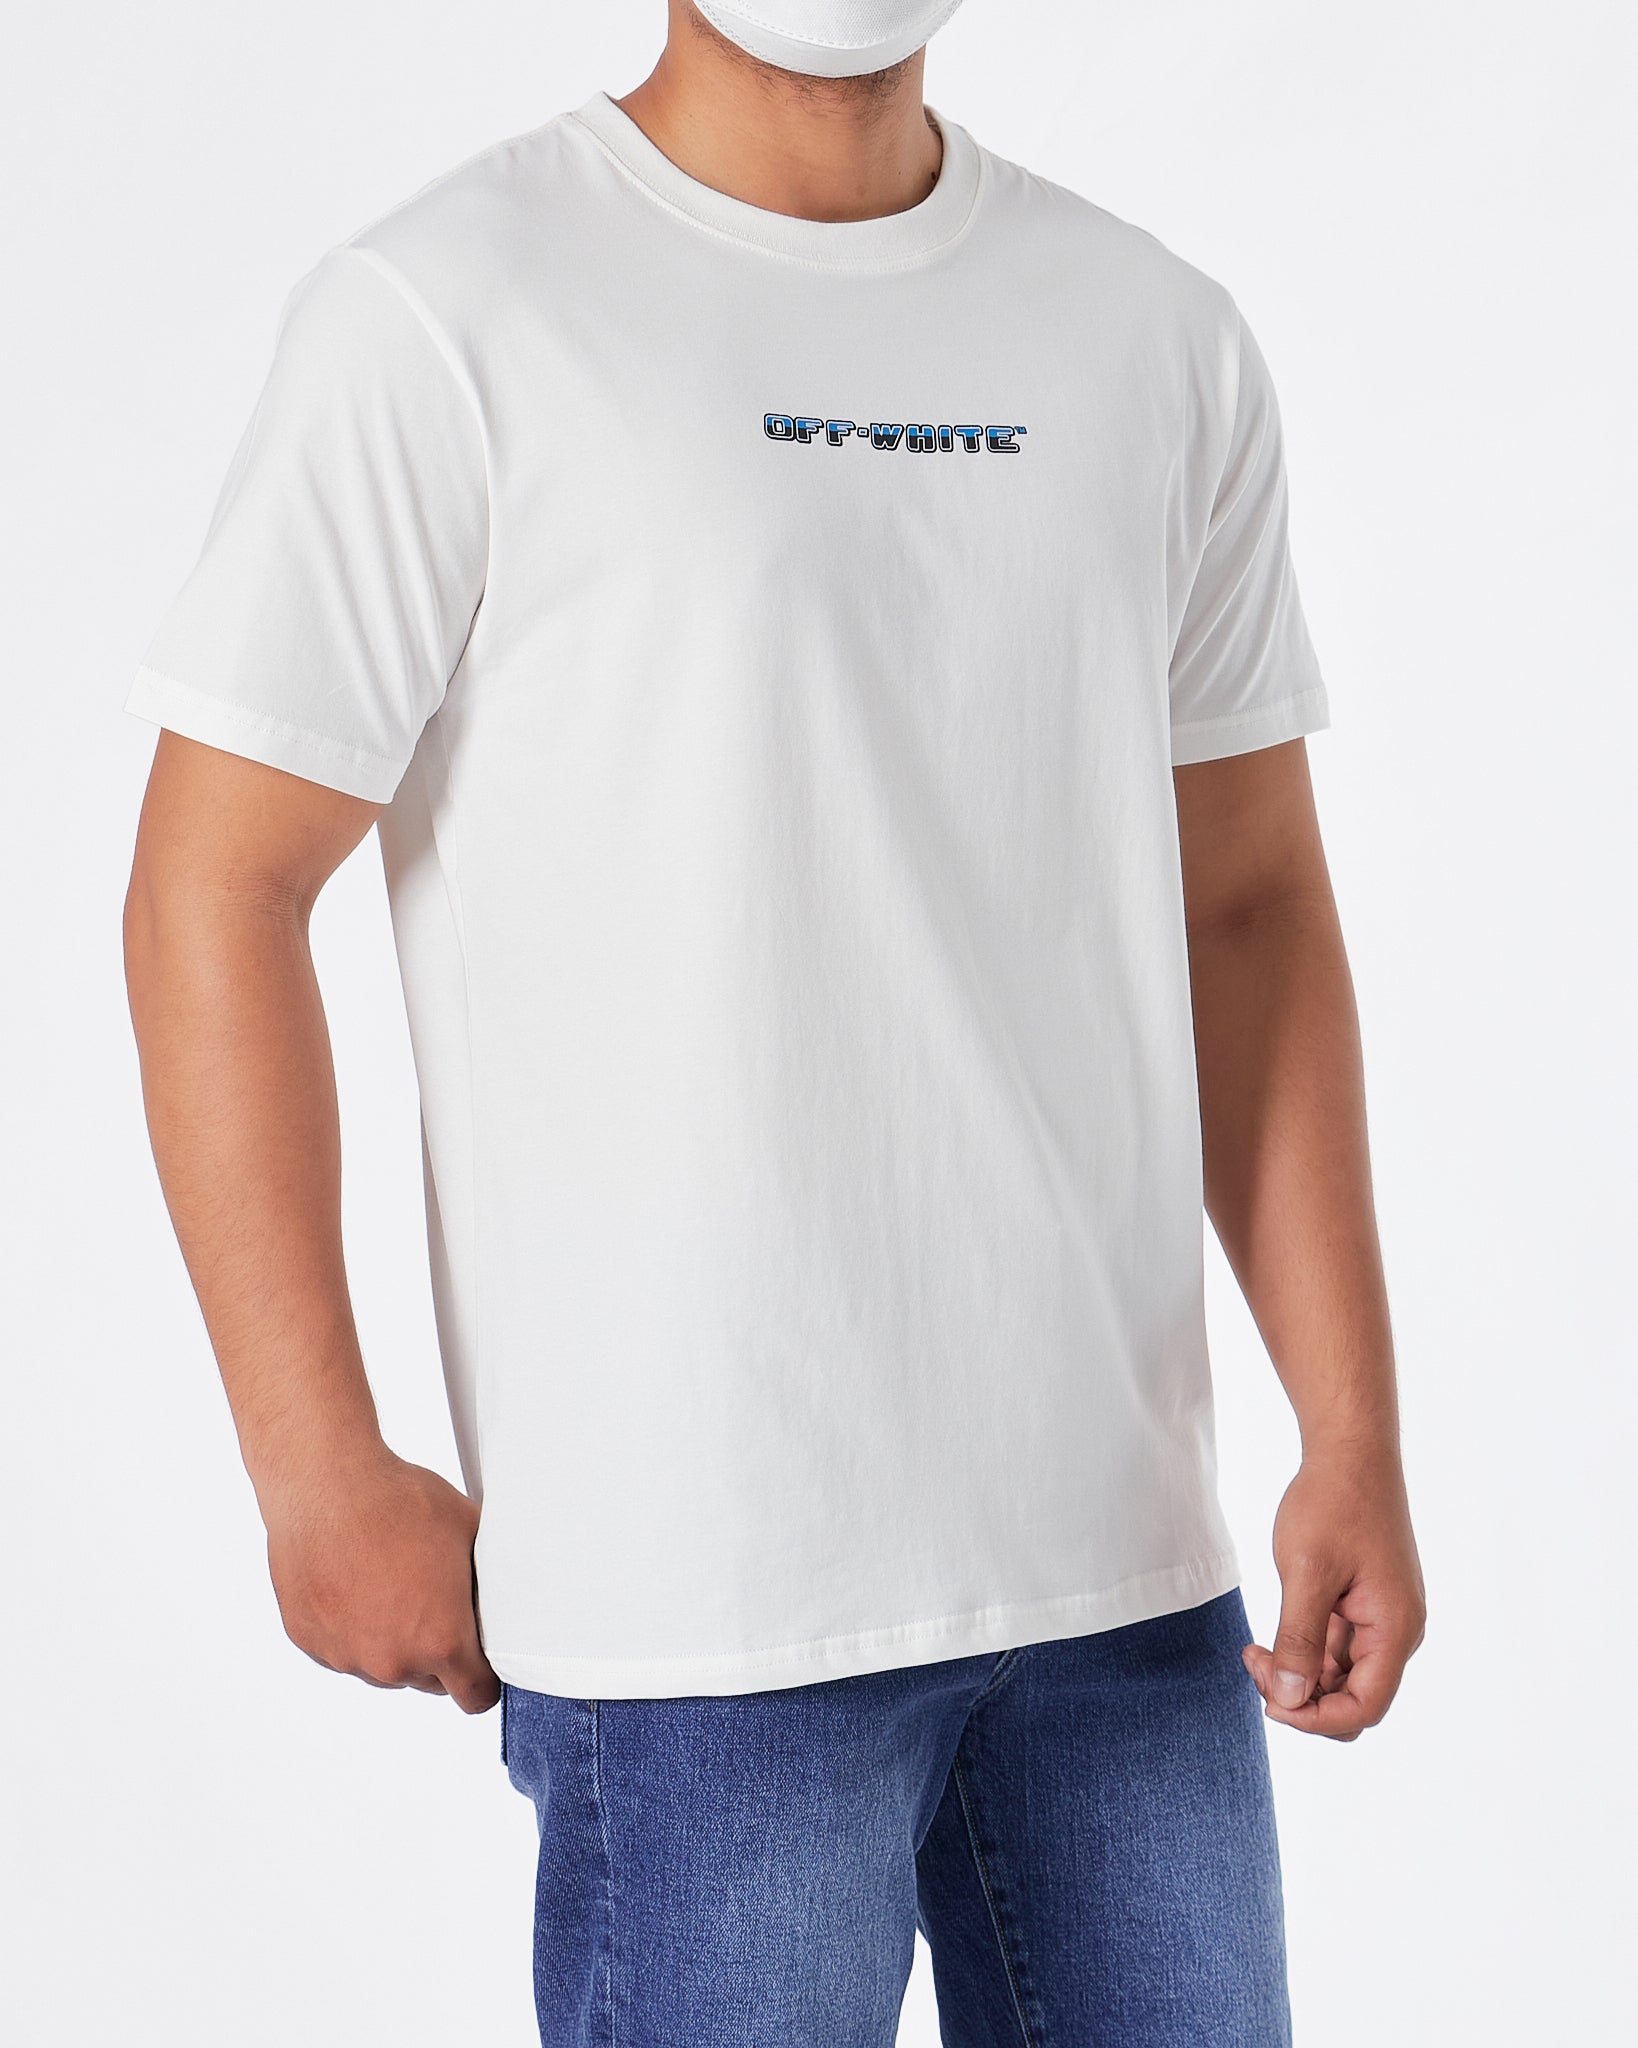 OW Cross Arrow Back Printed Men White T-Shirt 19.90